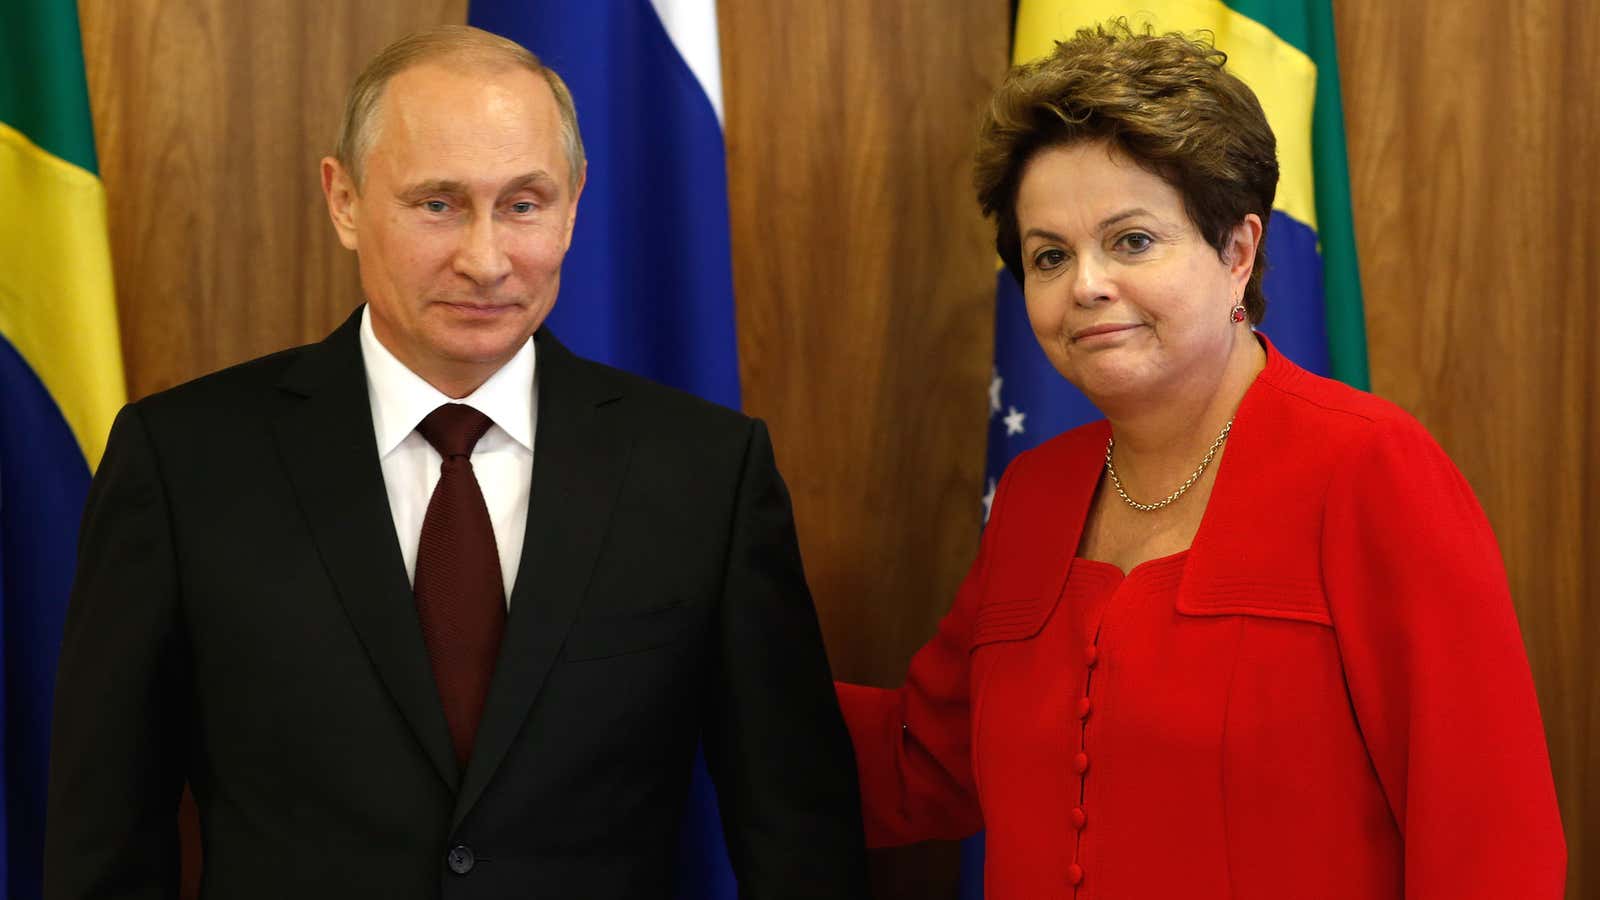 Russia’s President Vladimir Putin, left, with Brazil’s President Dilma Rousseff.